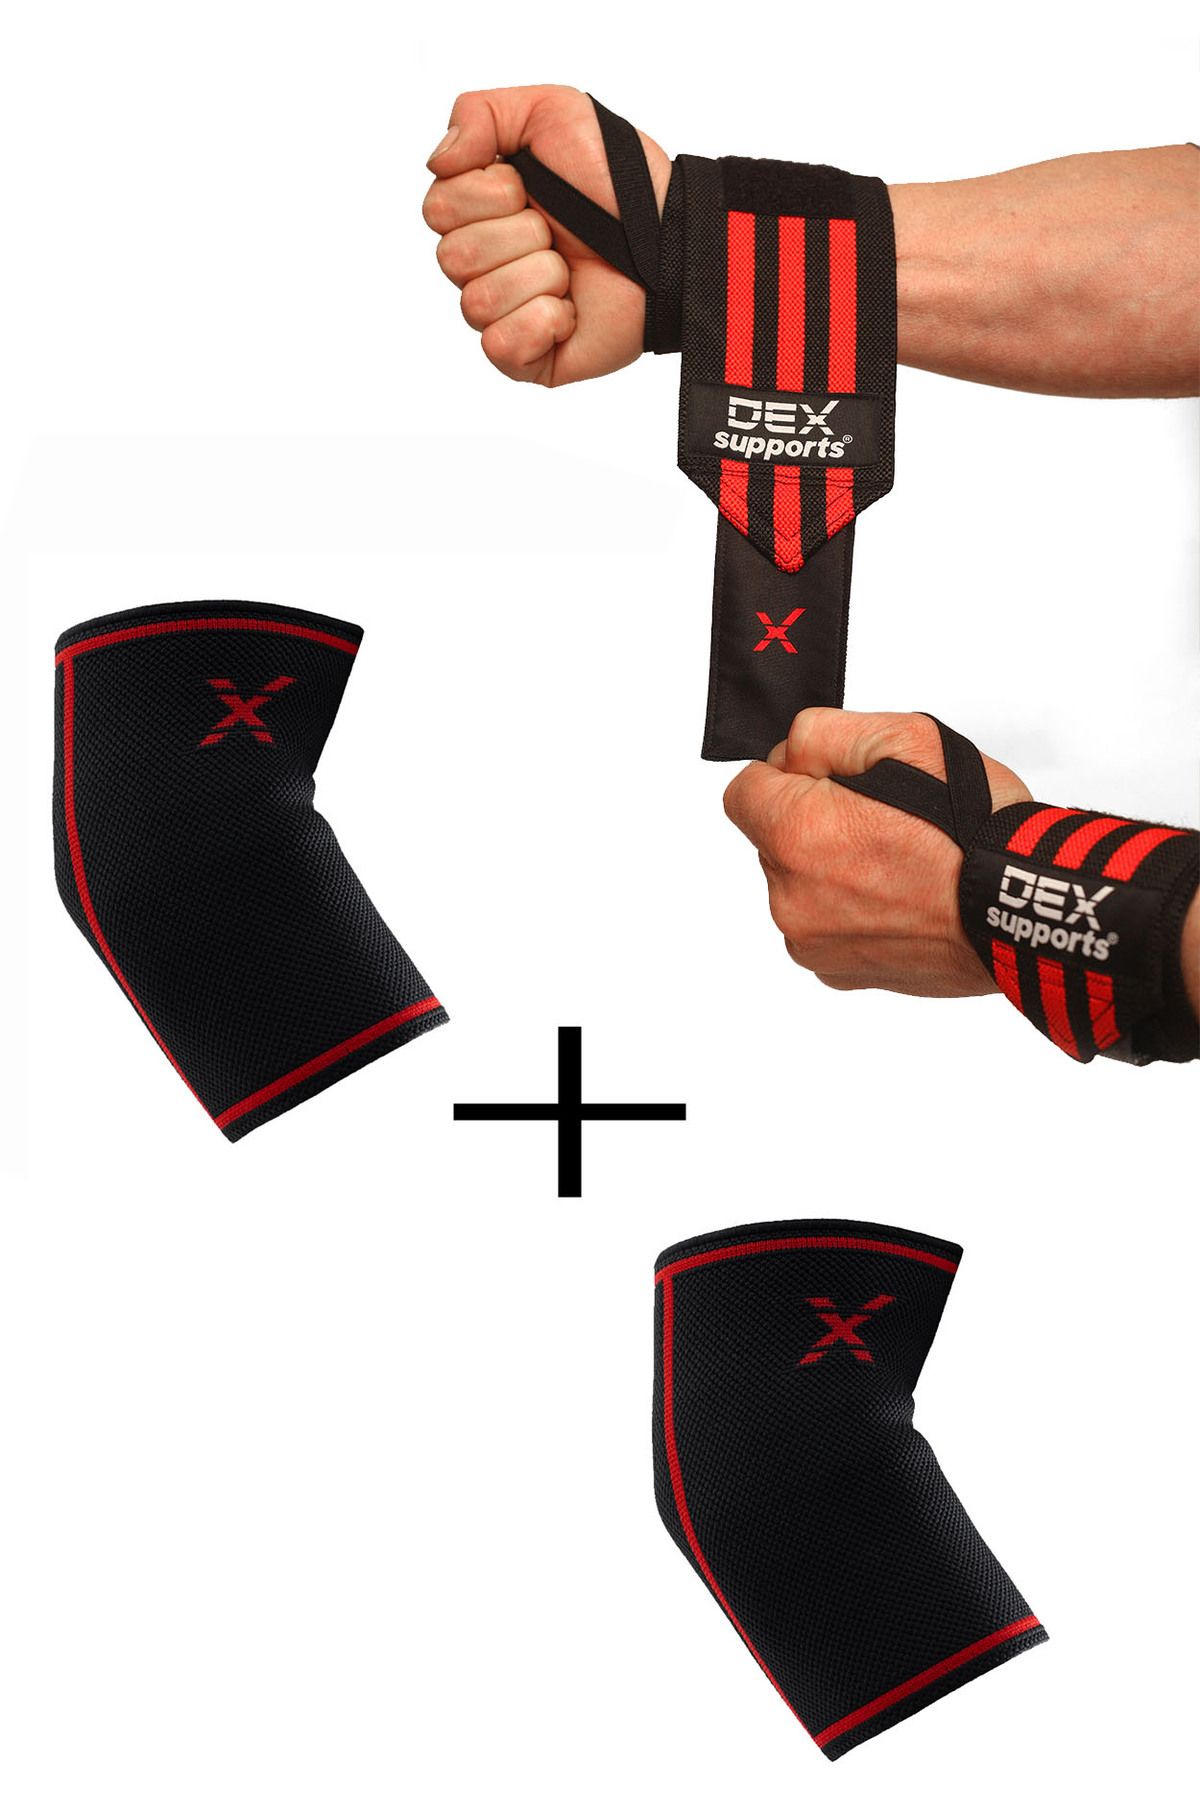 Dex Supports Lasting Energy Fitness Dirseklik , Fitness Bilek Bandajı Wraps , Elbow Sleeve, Wrist Wraps